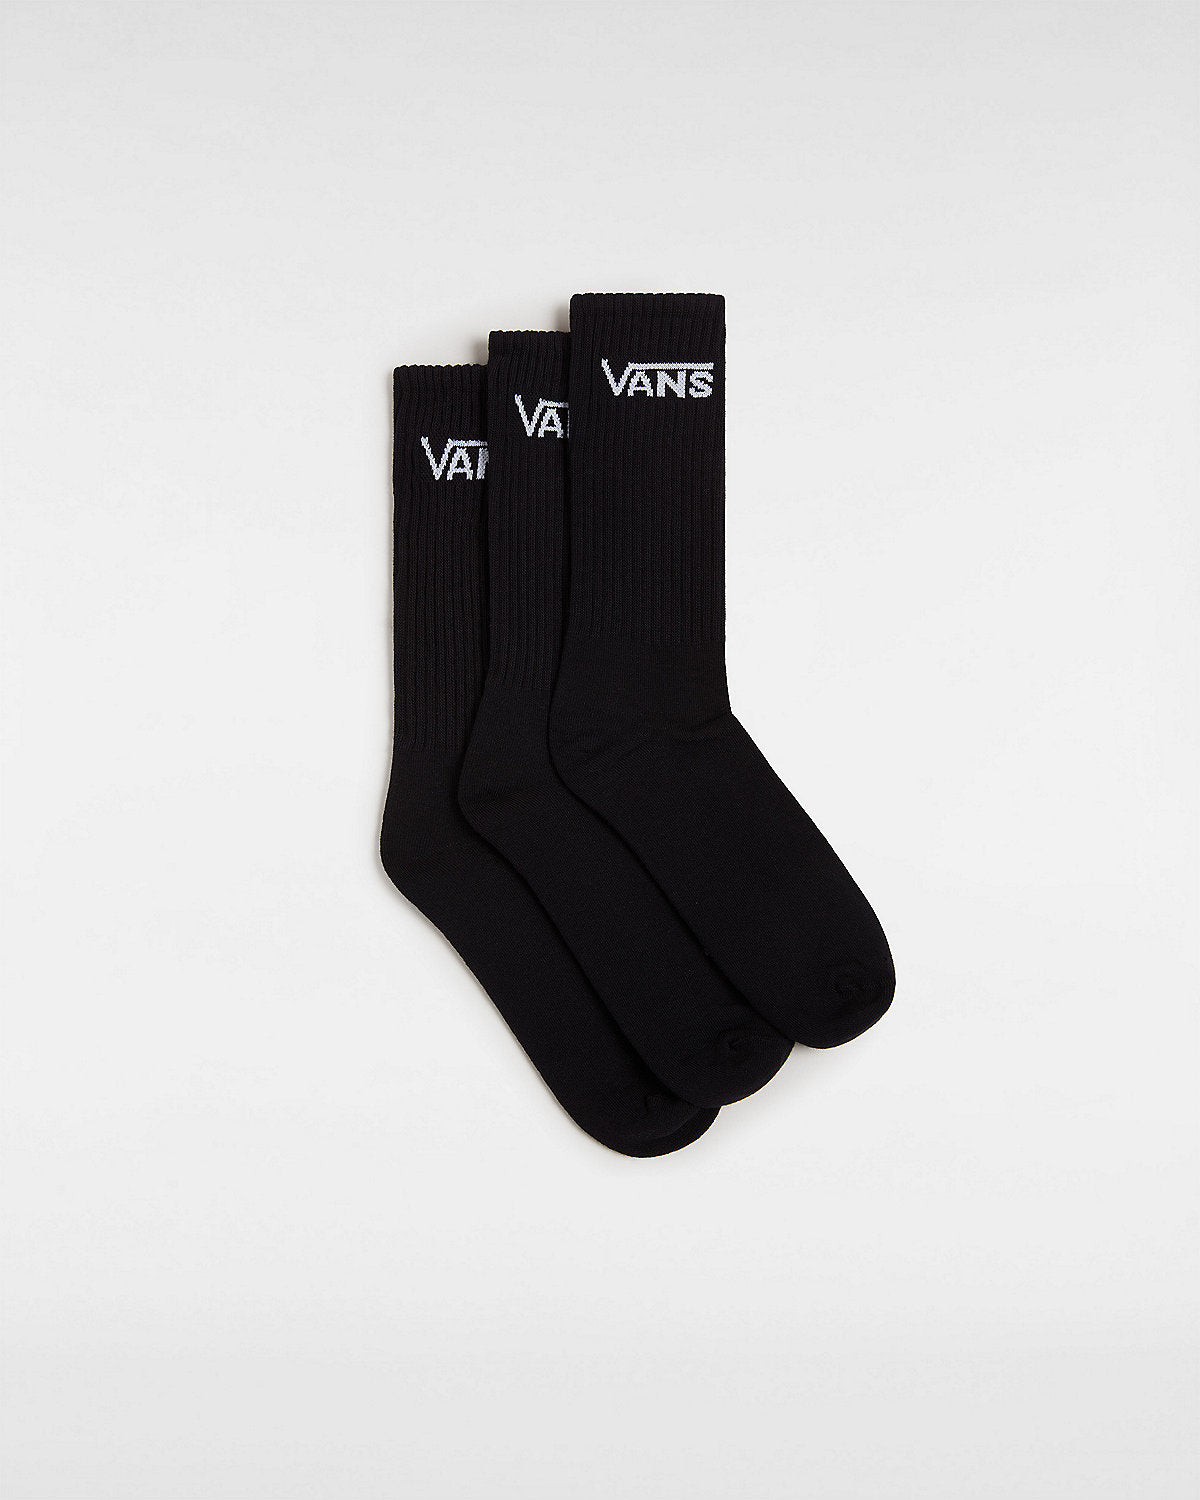 VANS Mens Classic Crew Socks (3 Pairs) - Black